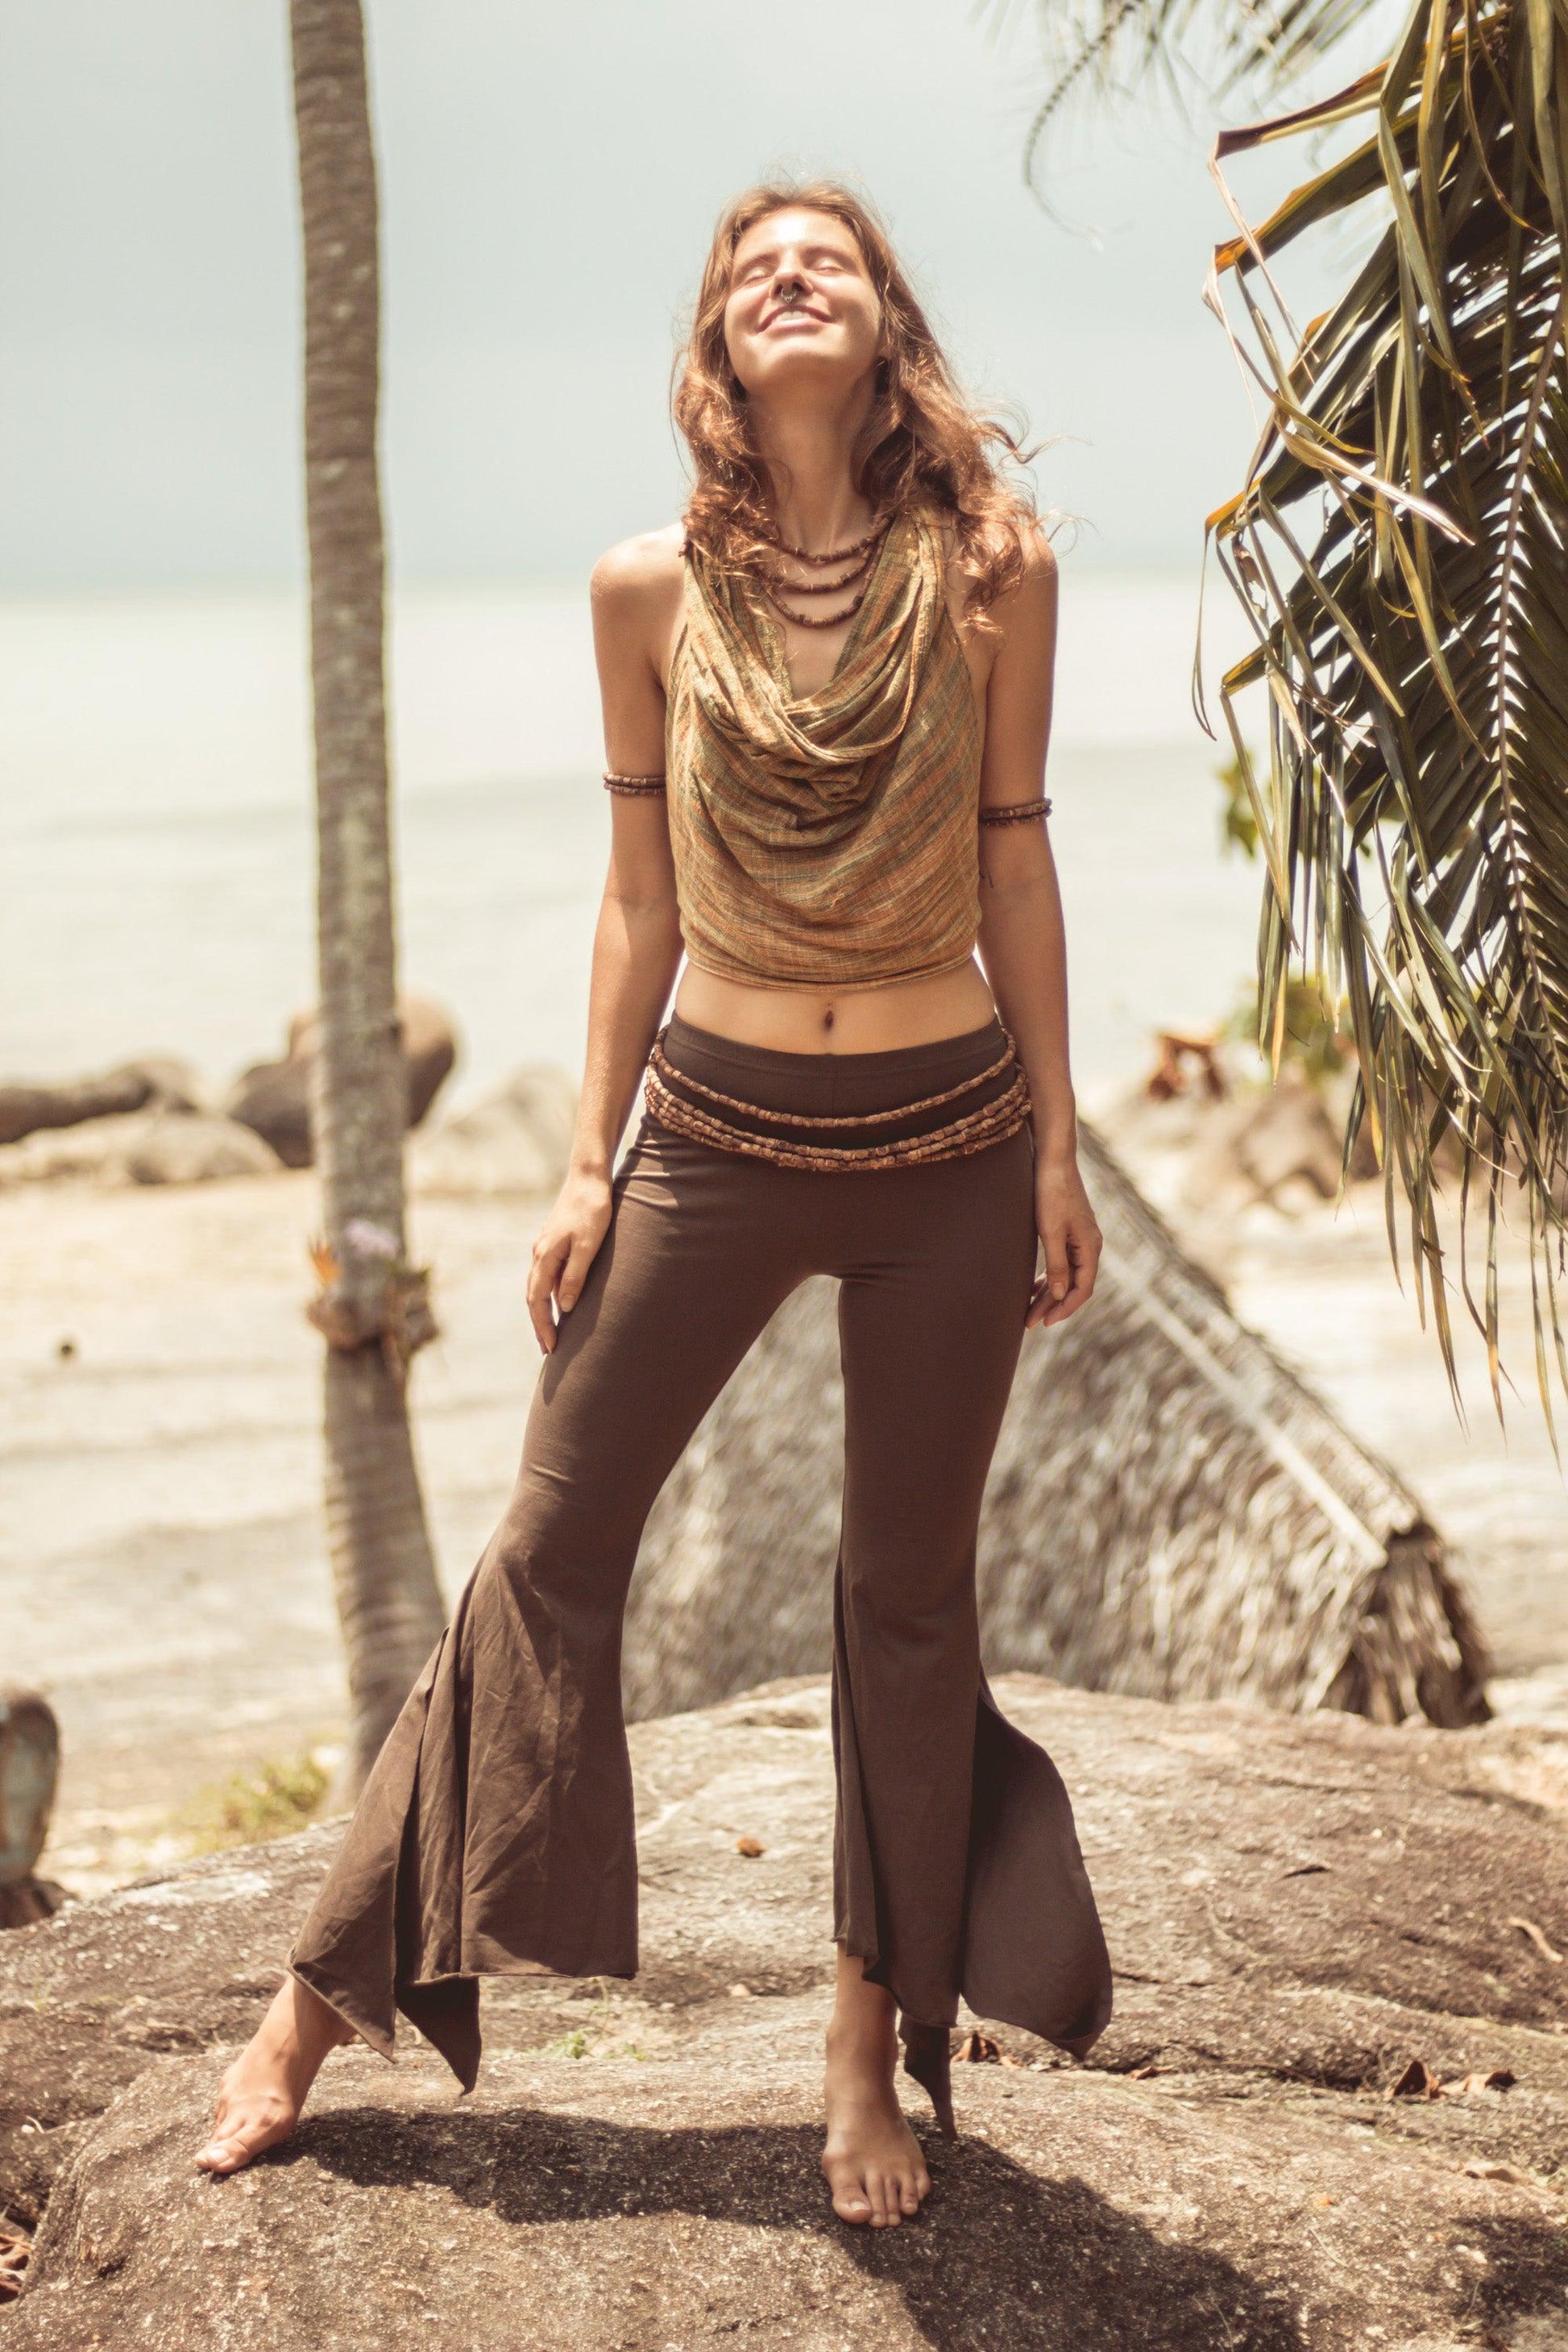 Brown stretch boho long leggings with geometric ethnic print, Gado